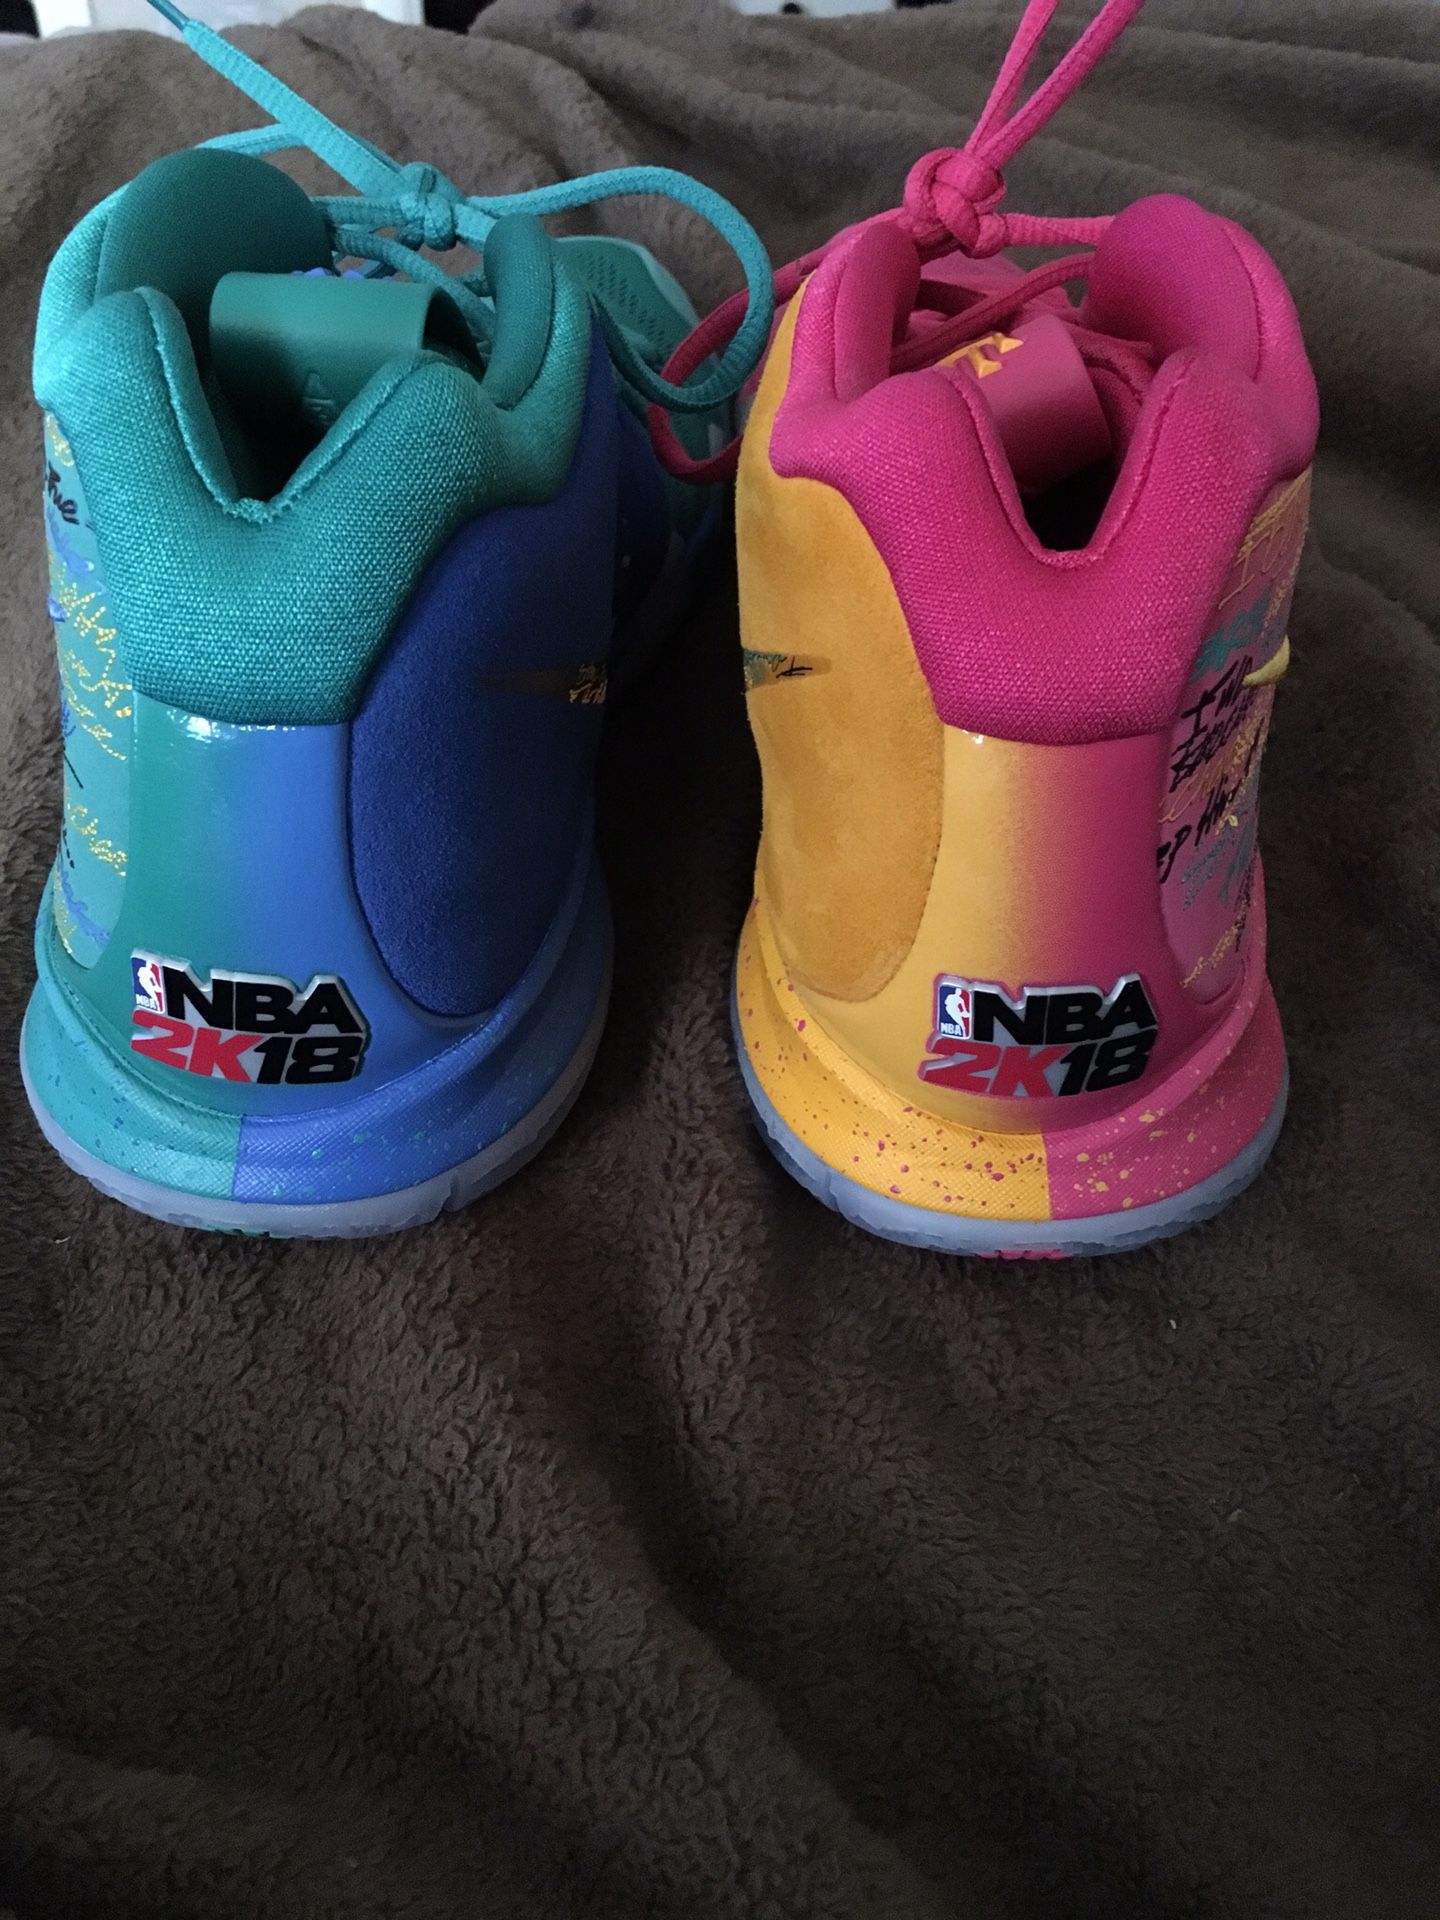 NBA 2K18 Shoes